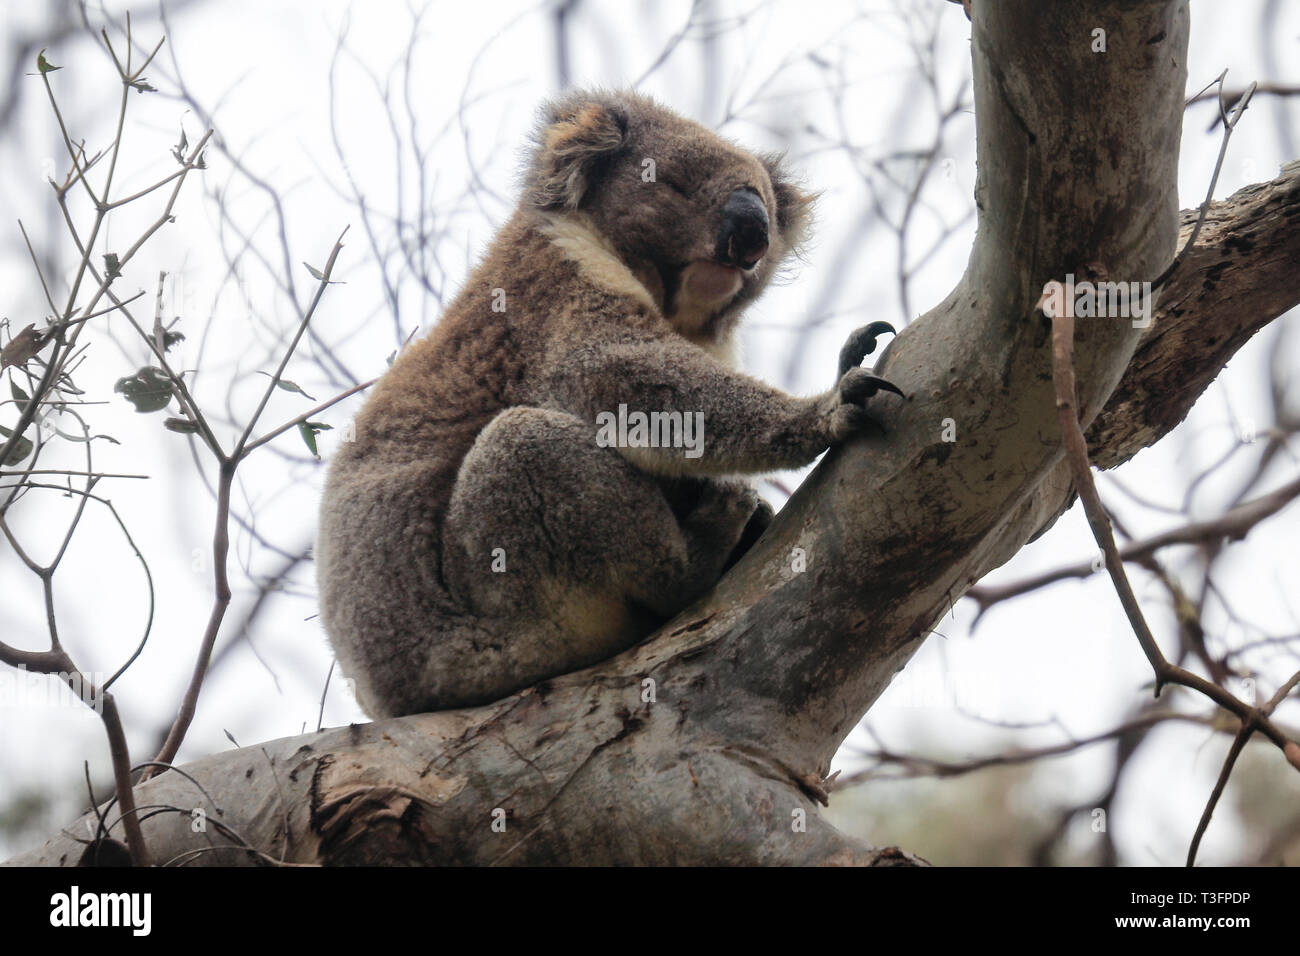 Furry oso coala durmiendo en la rama, cerca de Melbourne, Australia Foto de stock